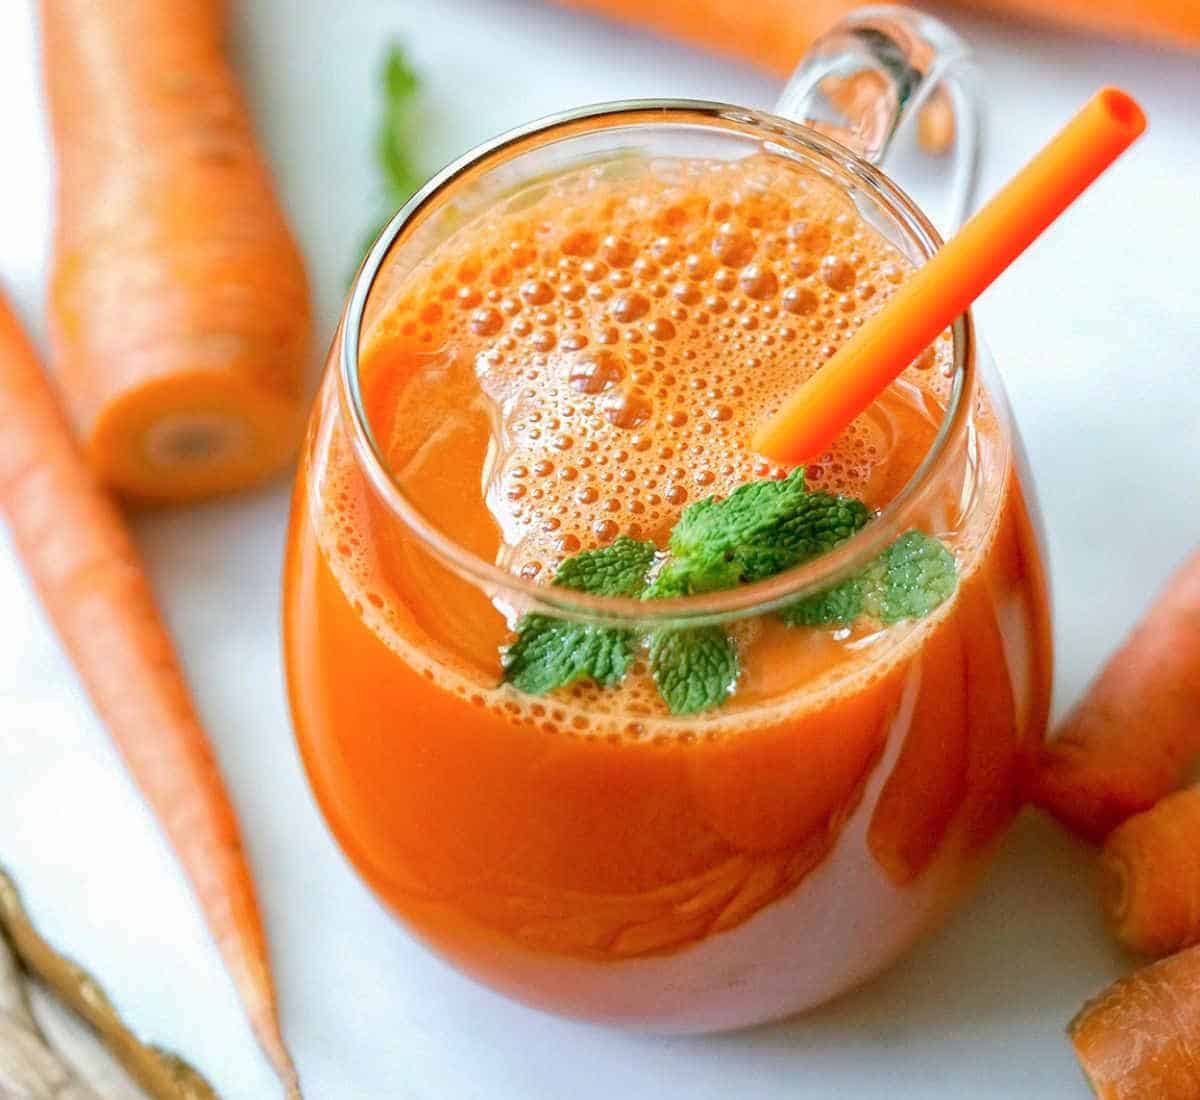 carrot juice recipe blender or juicer simple